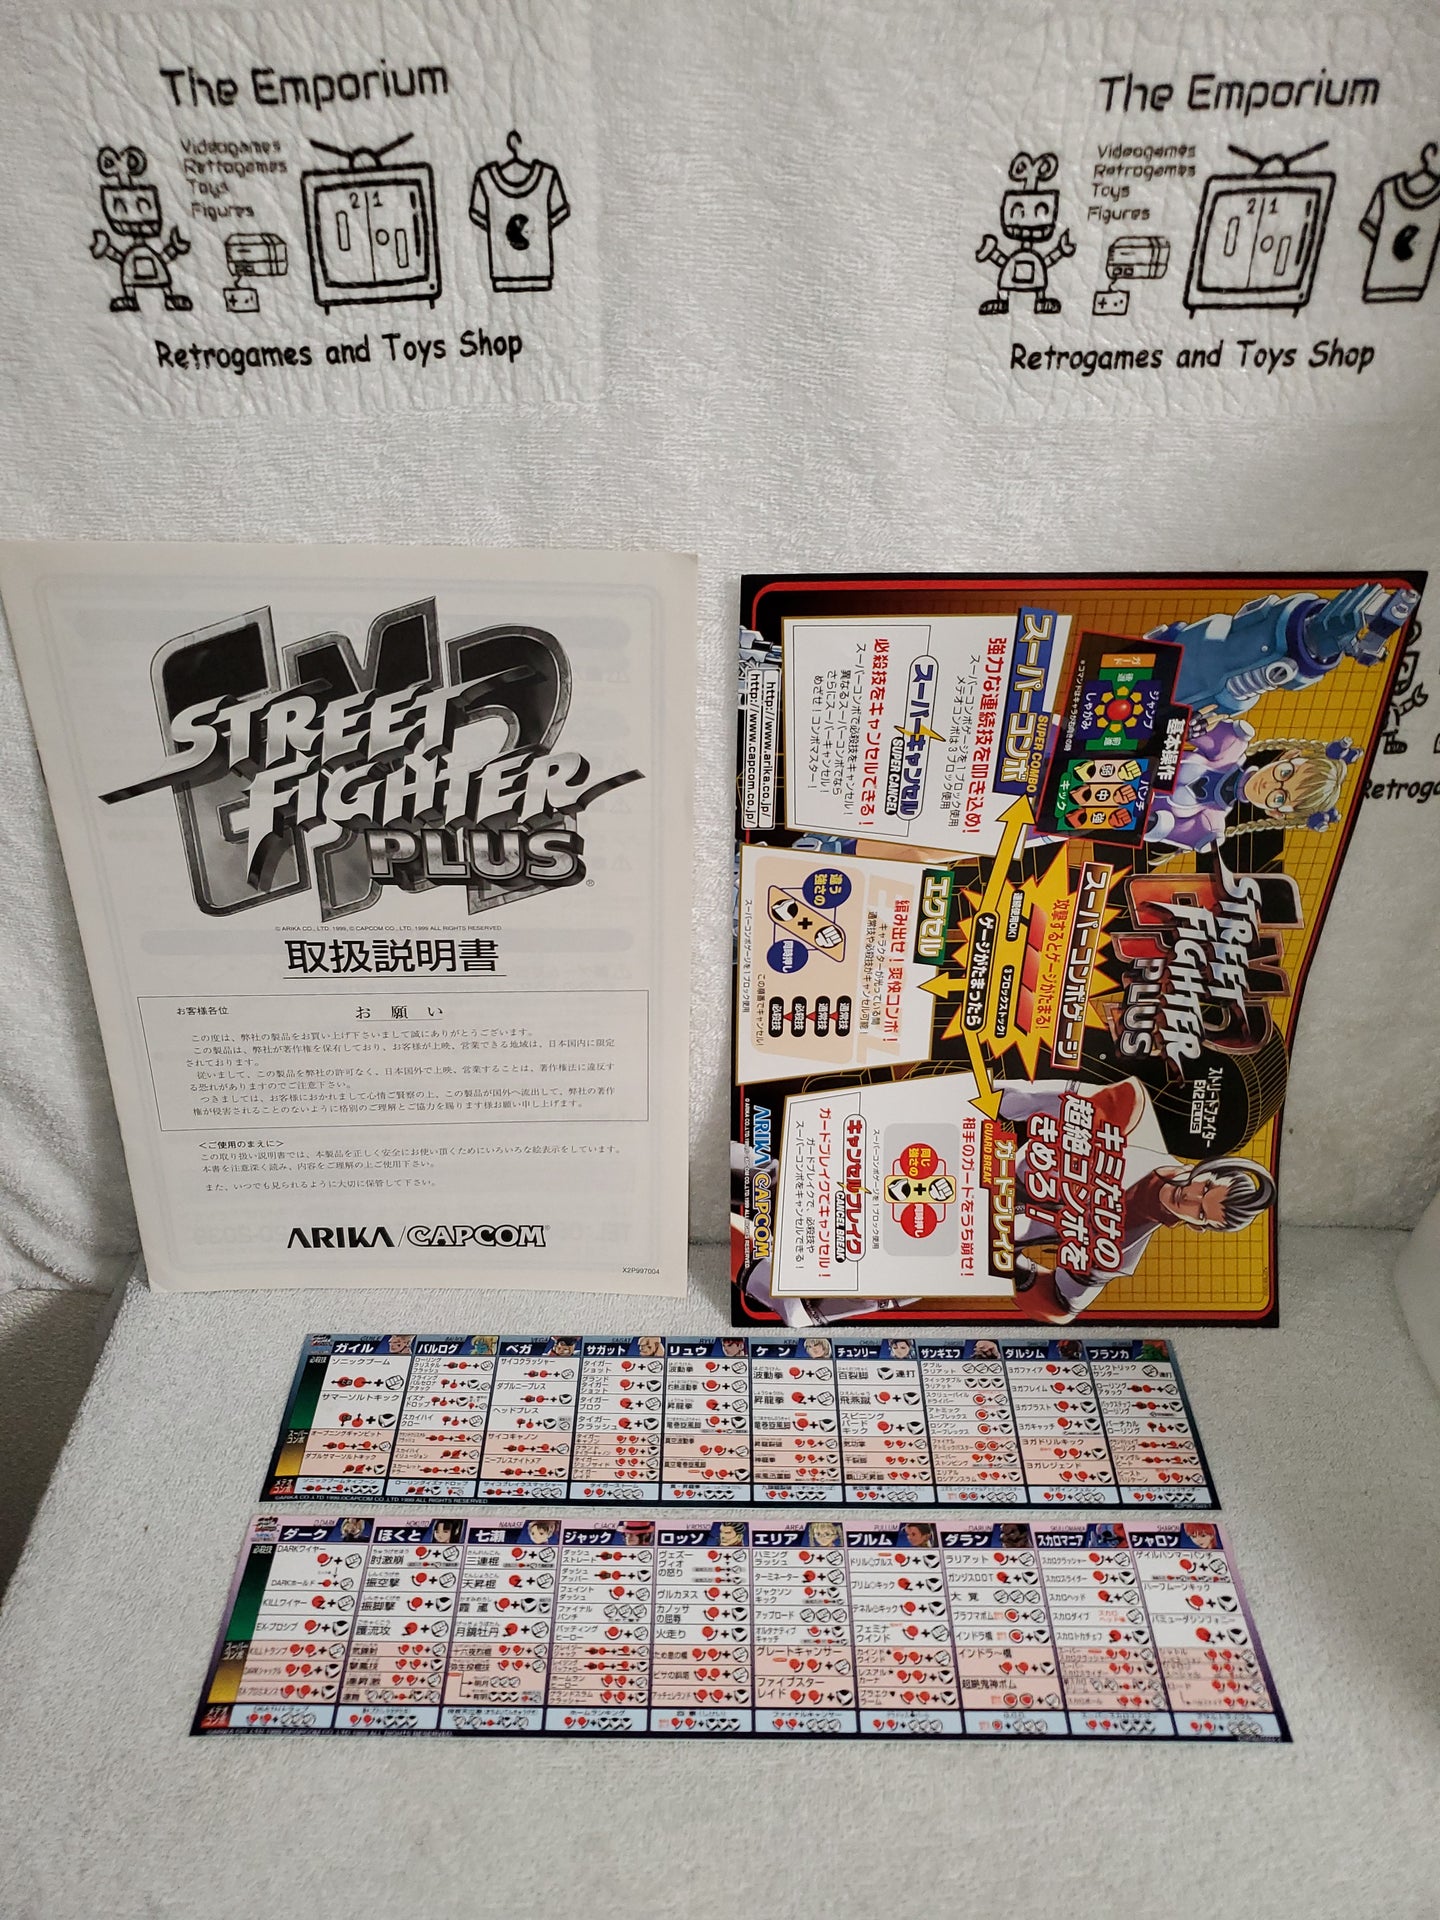 Street fighter ex2 plus  -  arcade artset art set